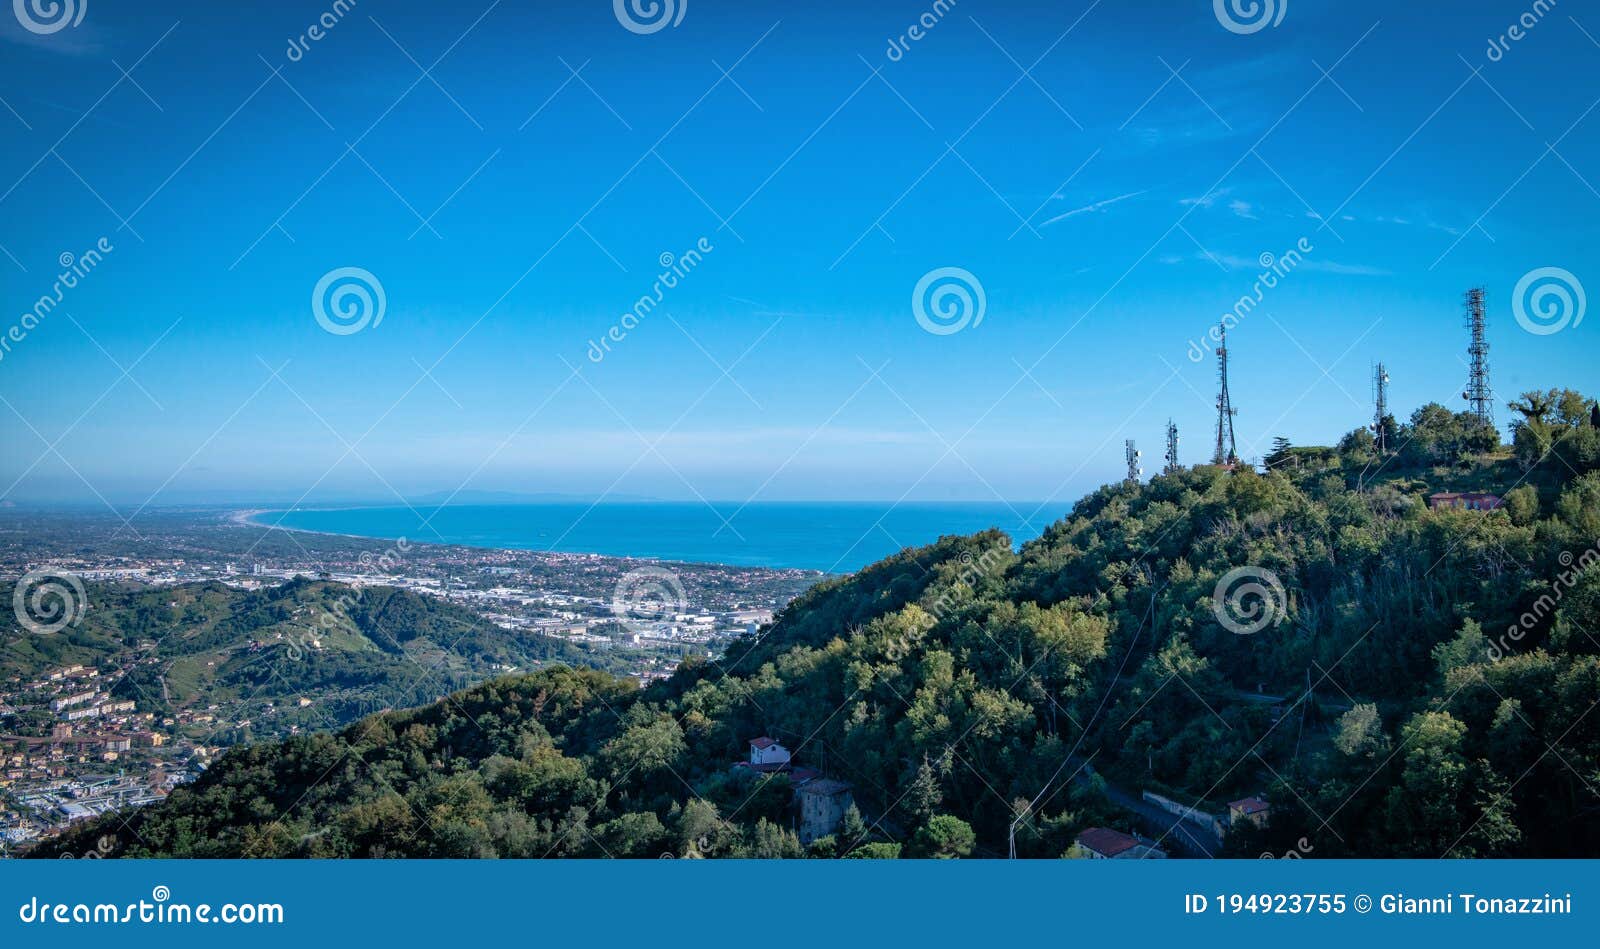 panorama of the coastline of versilia, tuscany, italy